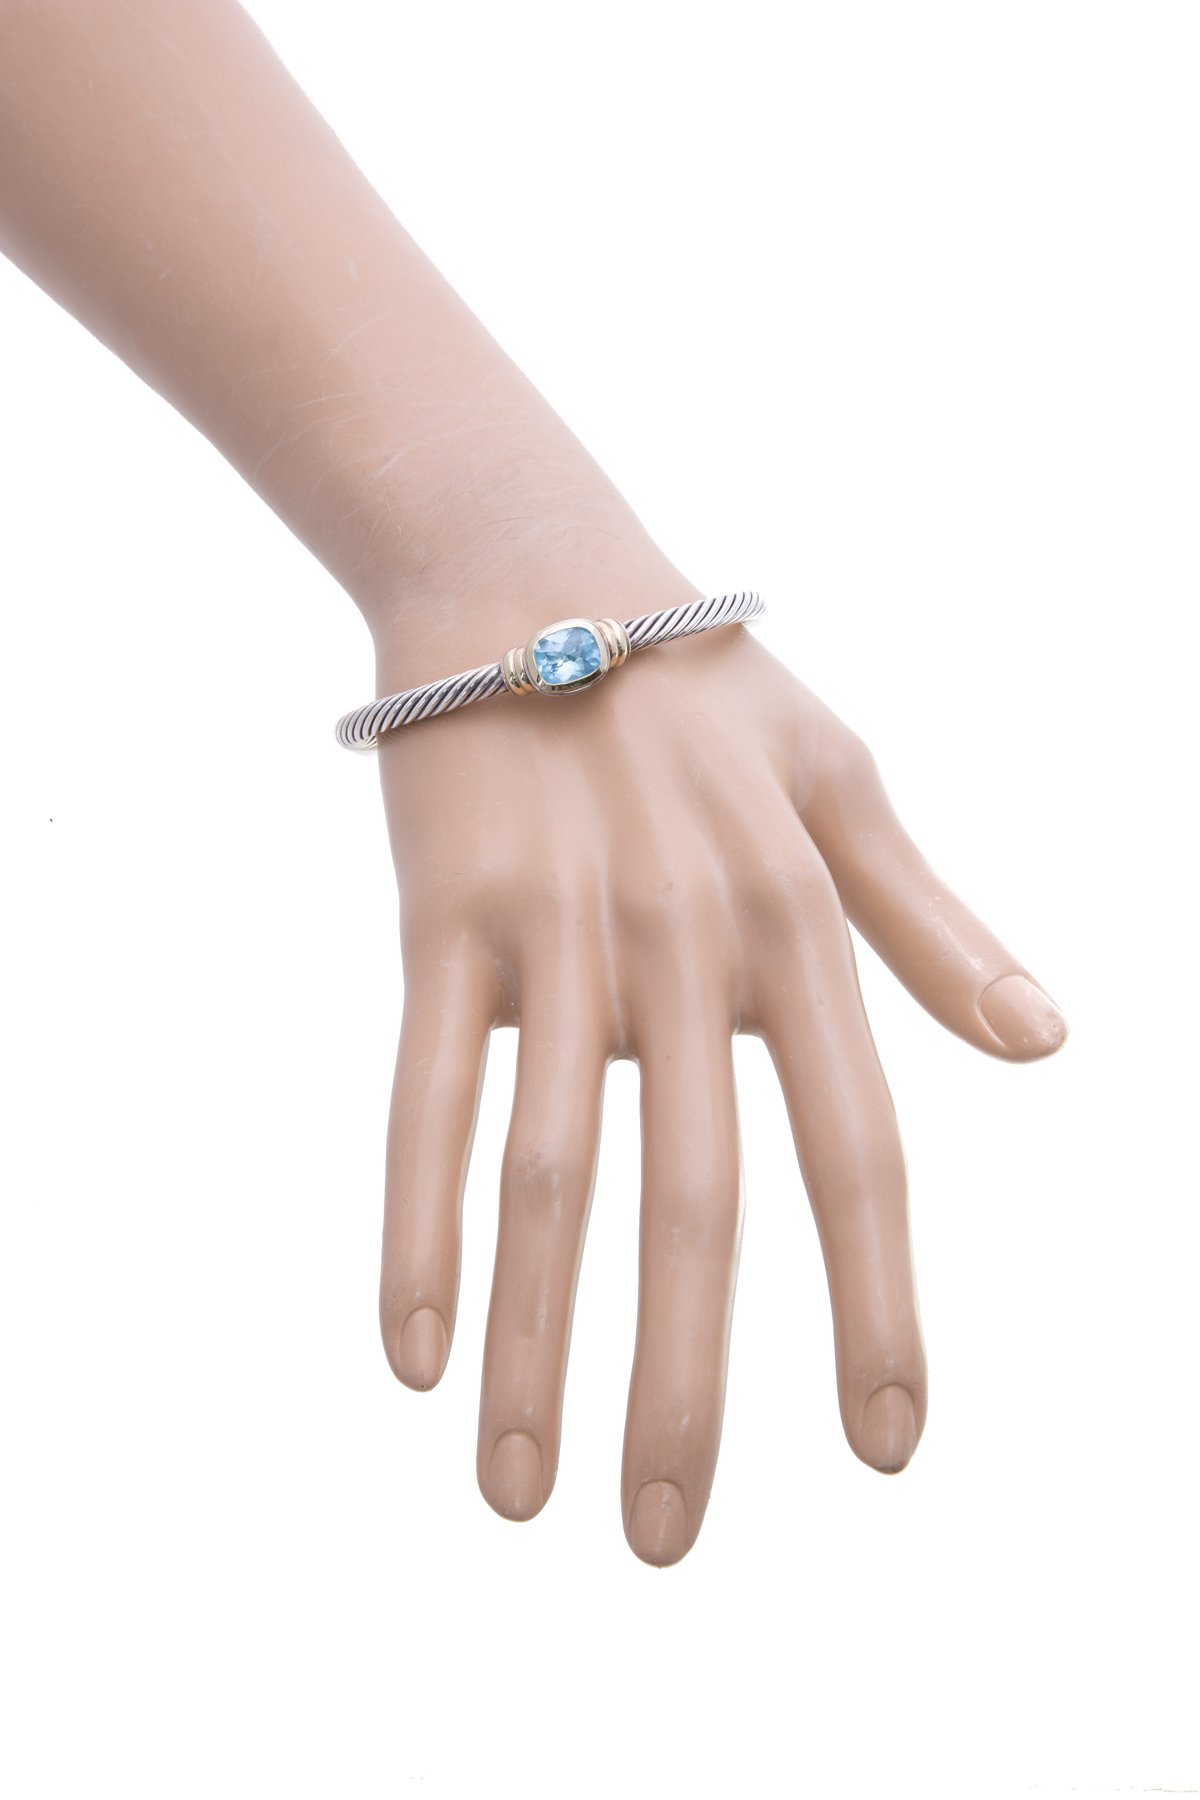 David Yurman Slvr/Gld Blue Tpz Noblesse Bracelet